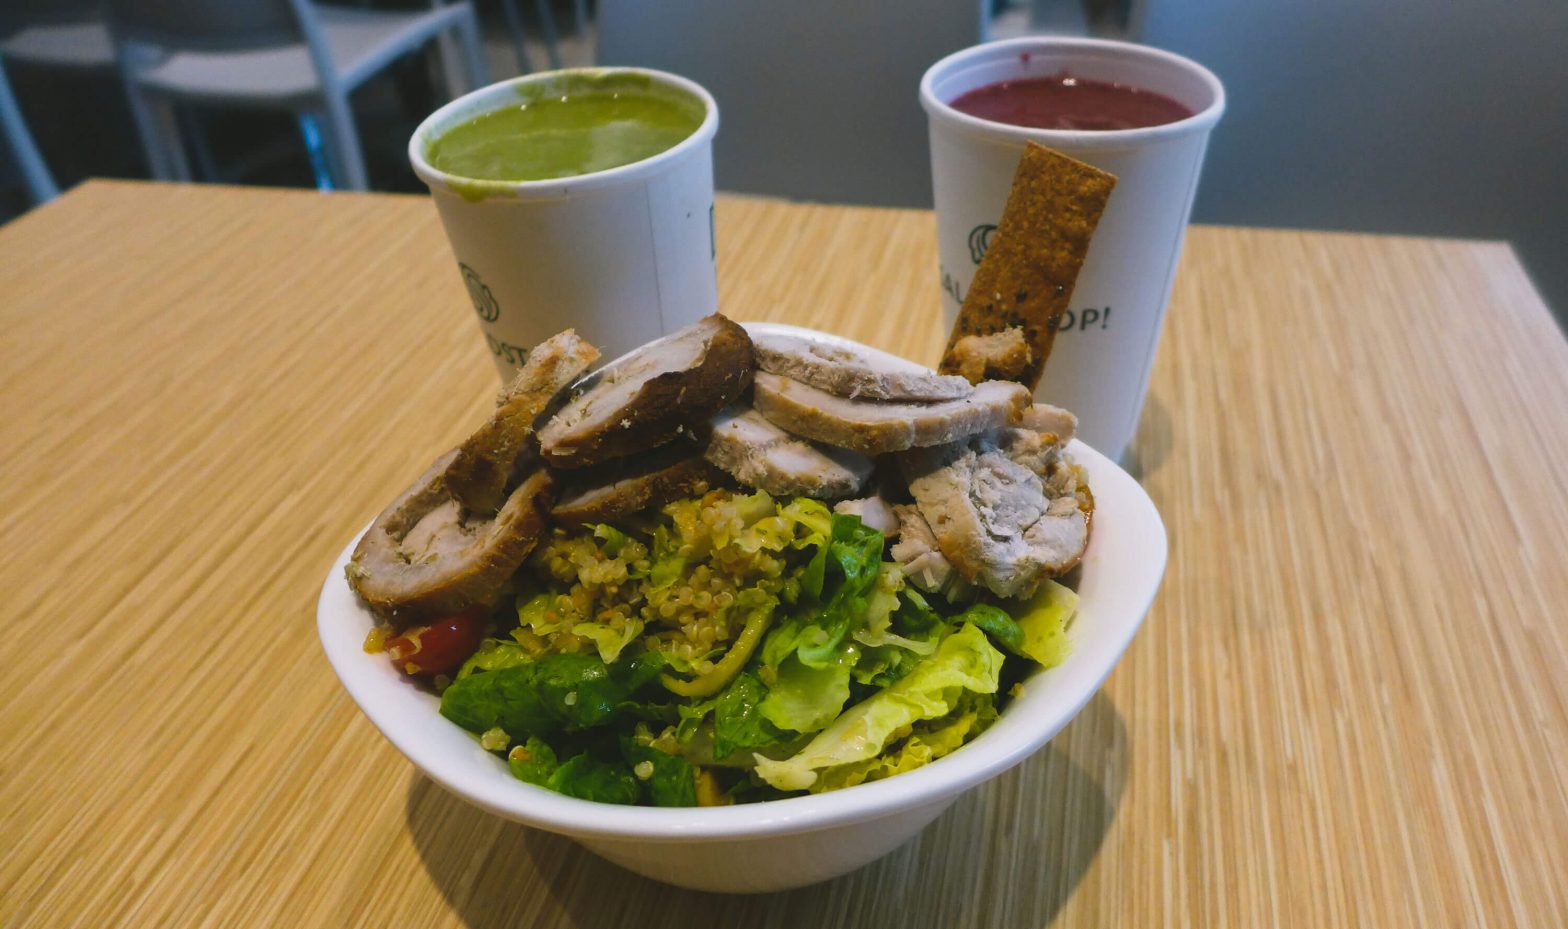 SaladStop! opens 2nd Cebu outlet at Oakridge